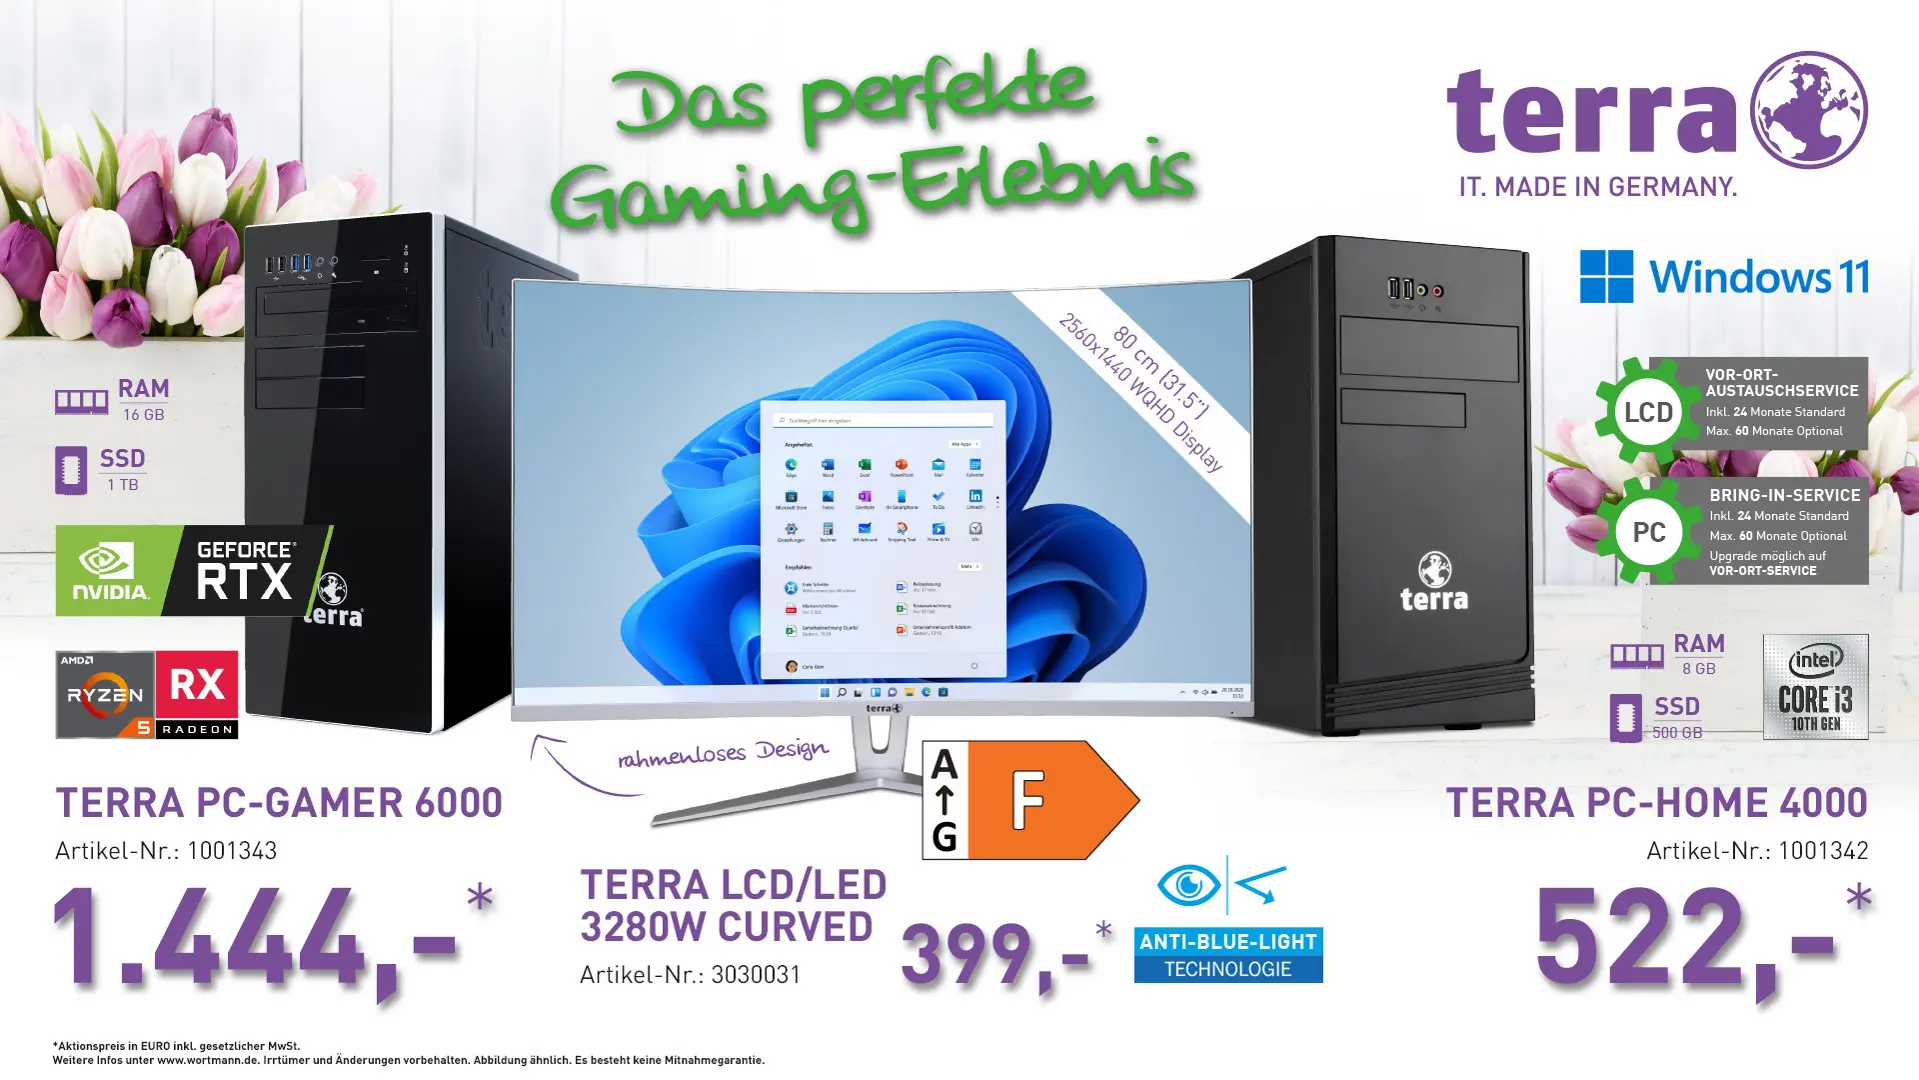 TERRA-PC-GAMER-6000,TERRA-PC-HOME-4000,TERRA-LCD-3280W Curved